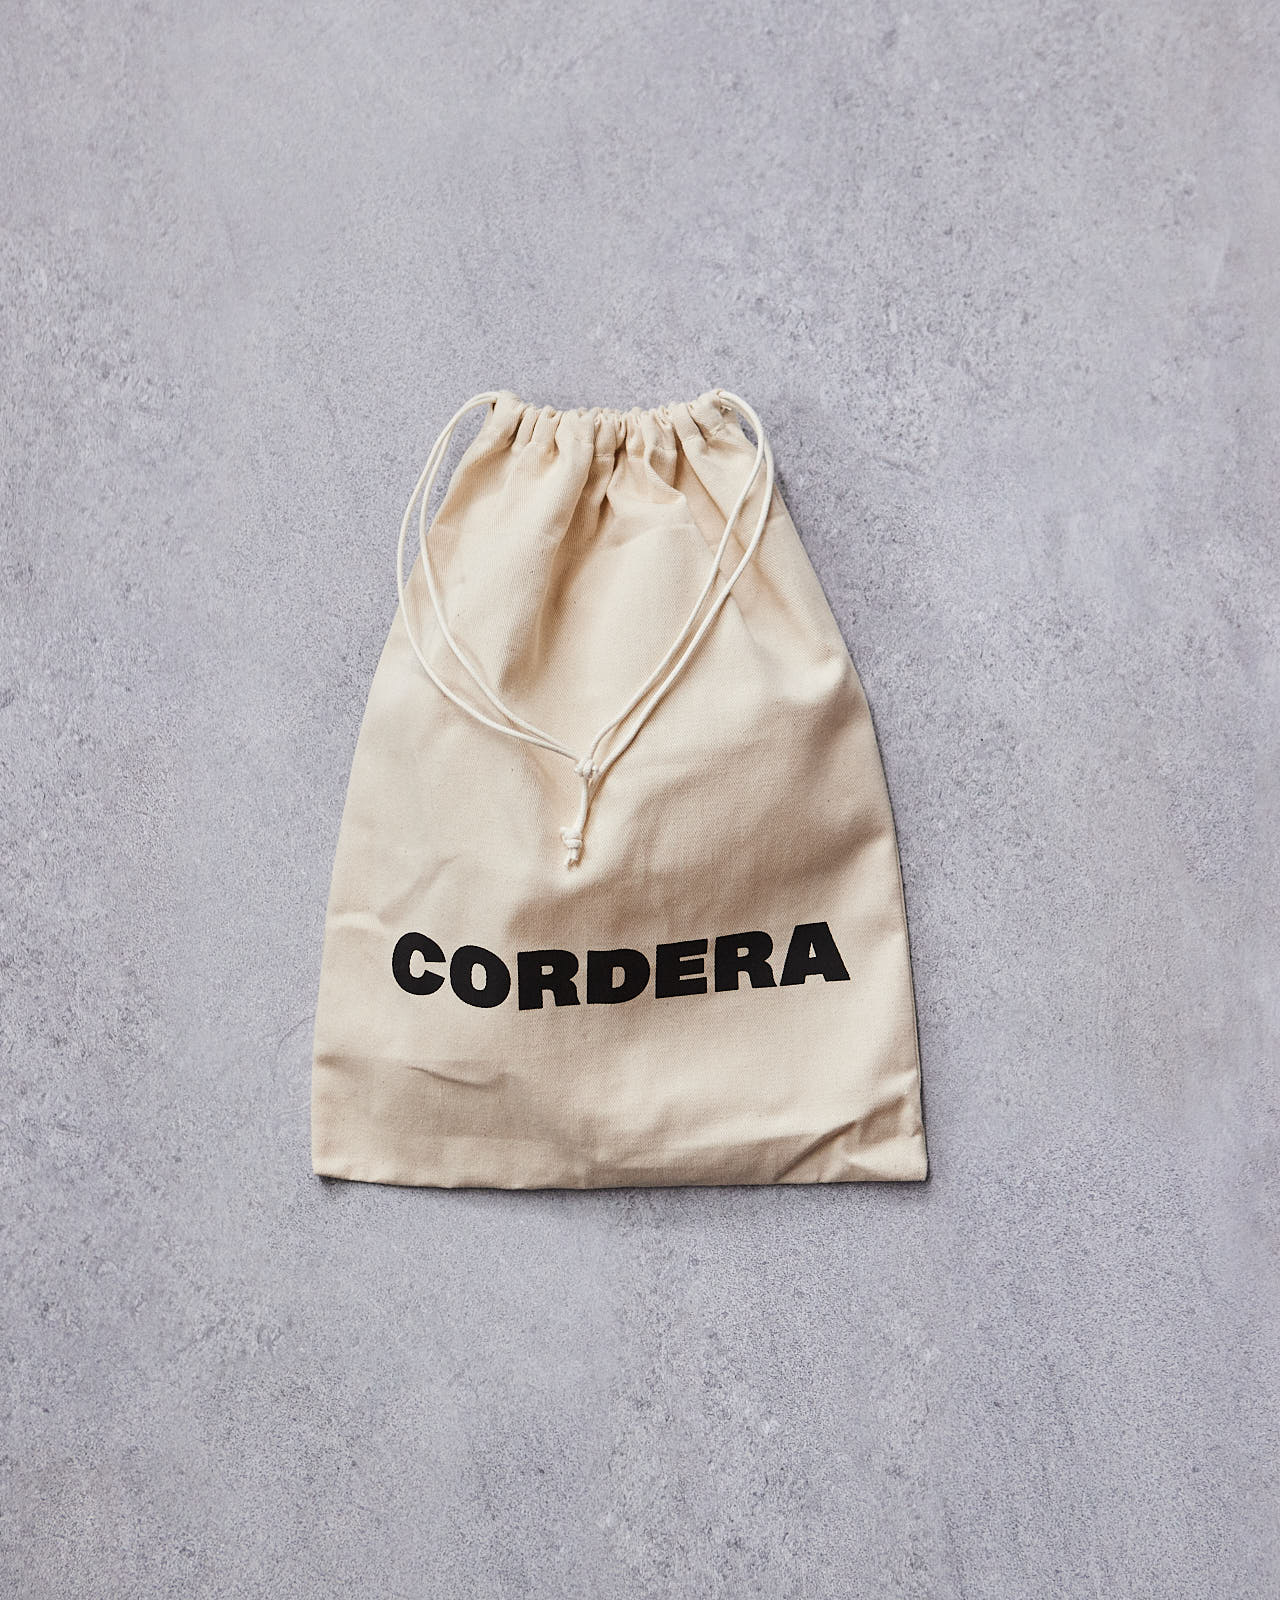 Cordera Leather Purse Bag, Black